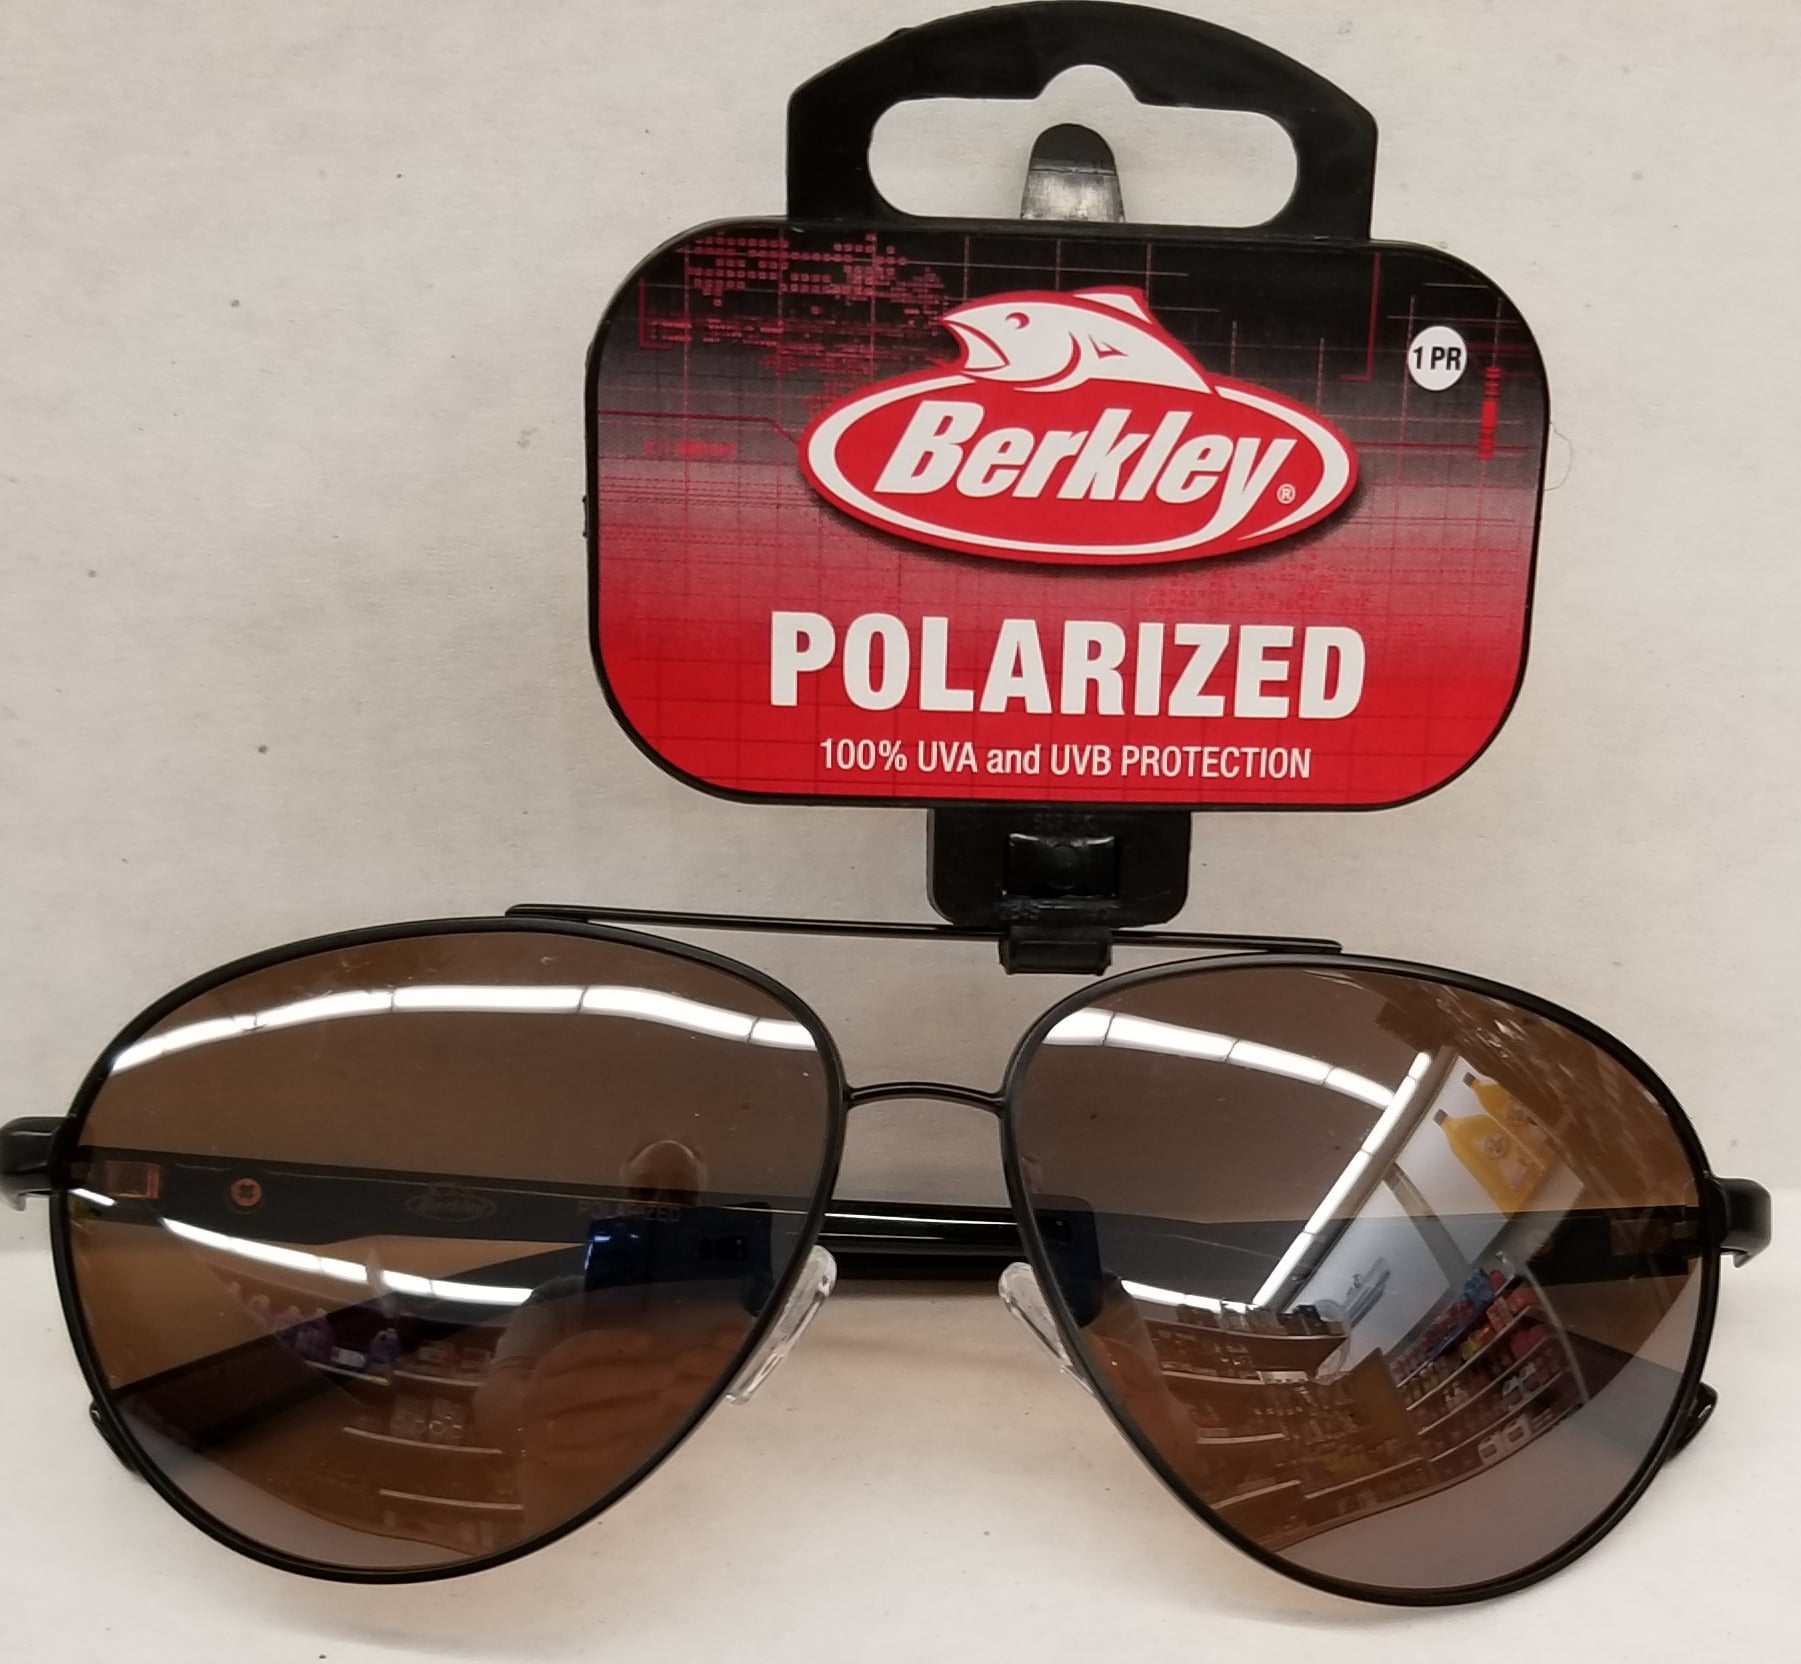 Details 241+ berkley sunglasses walmart